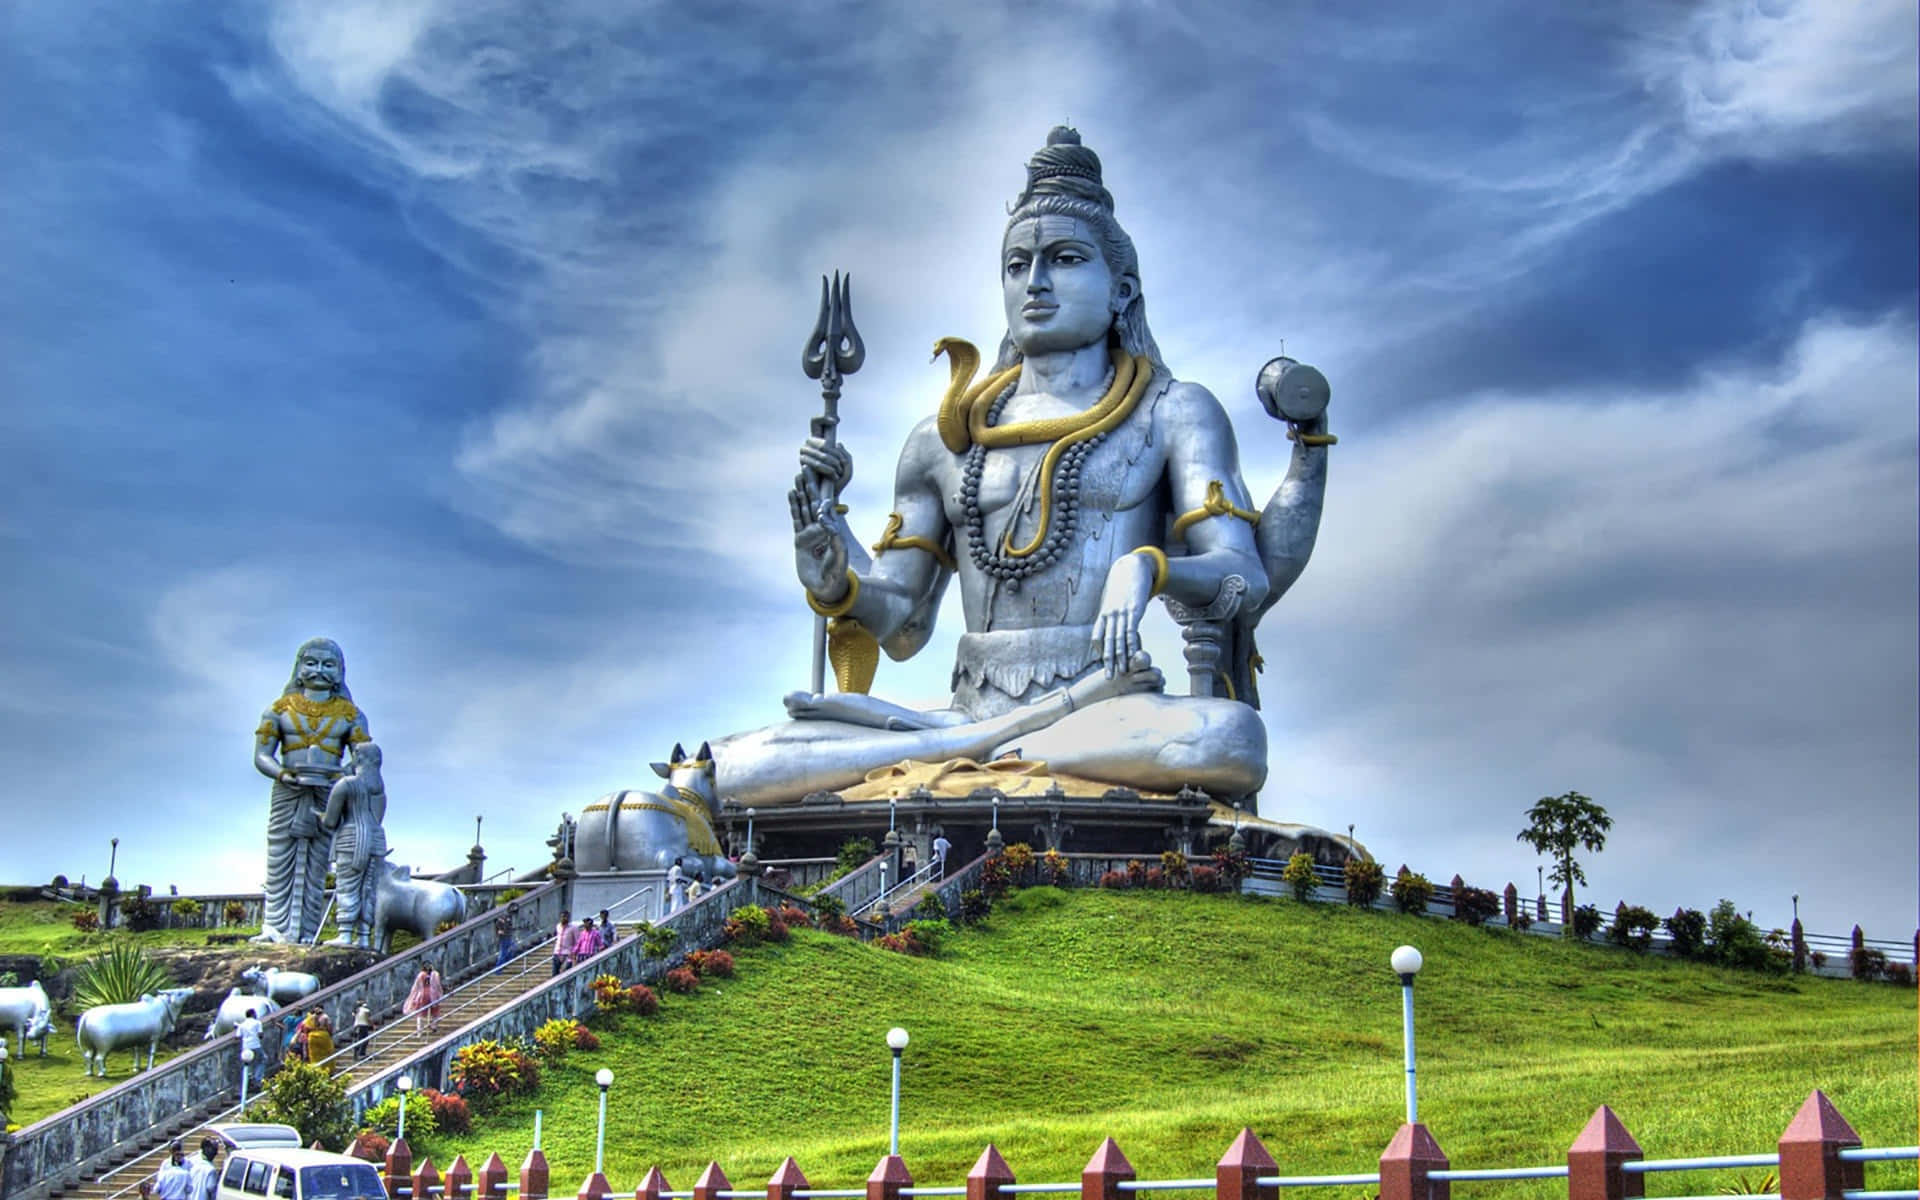 Lord Shiva, the Supreme God in the Hindu Trinity